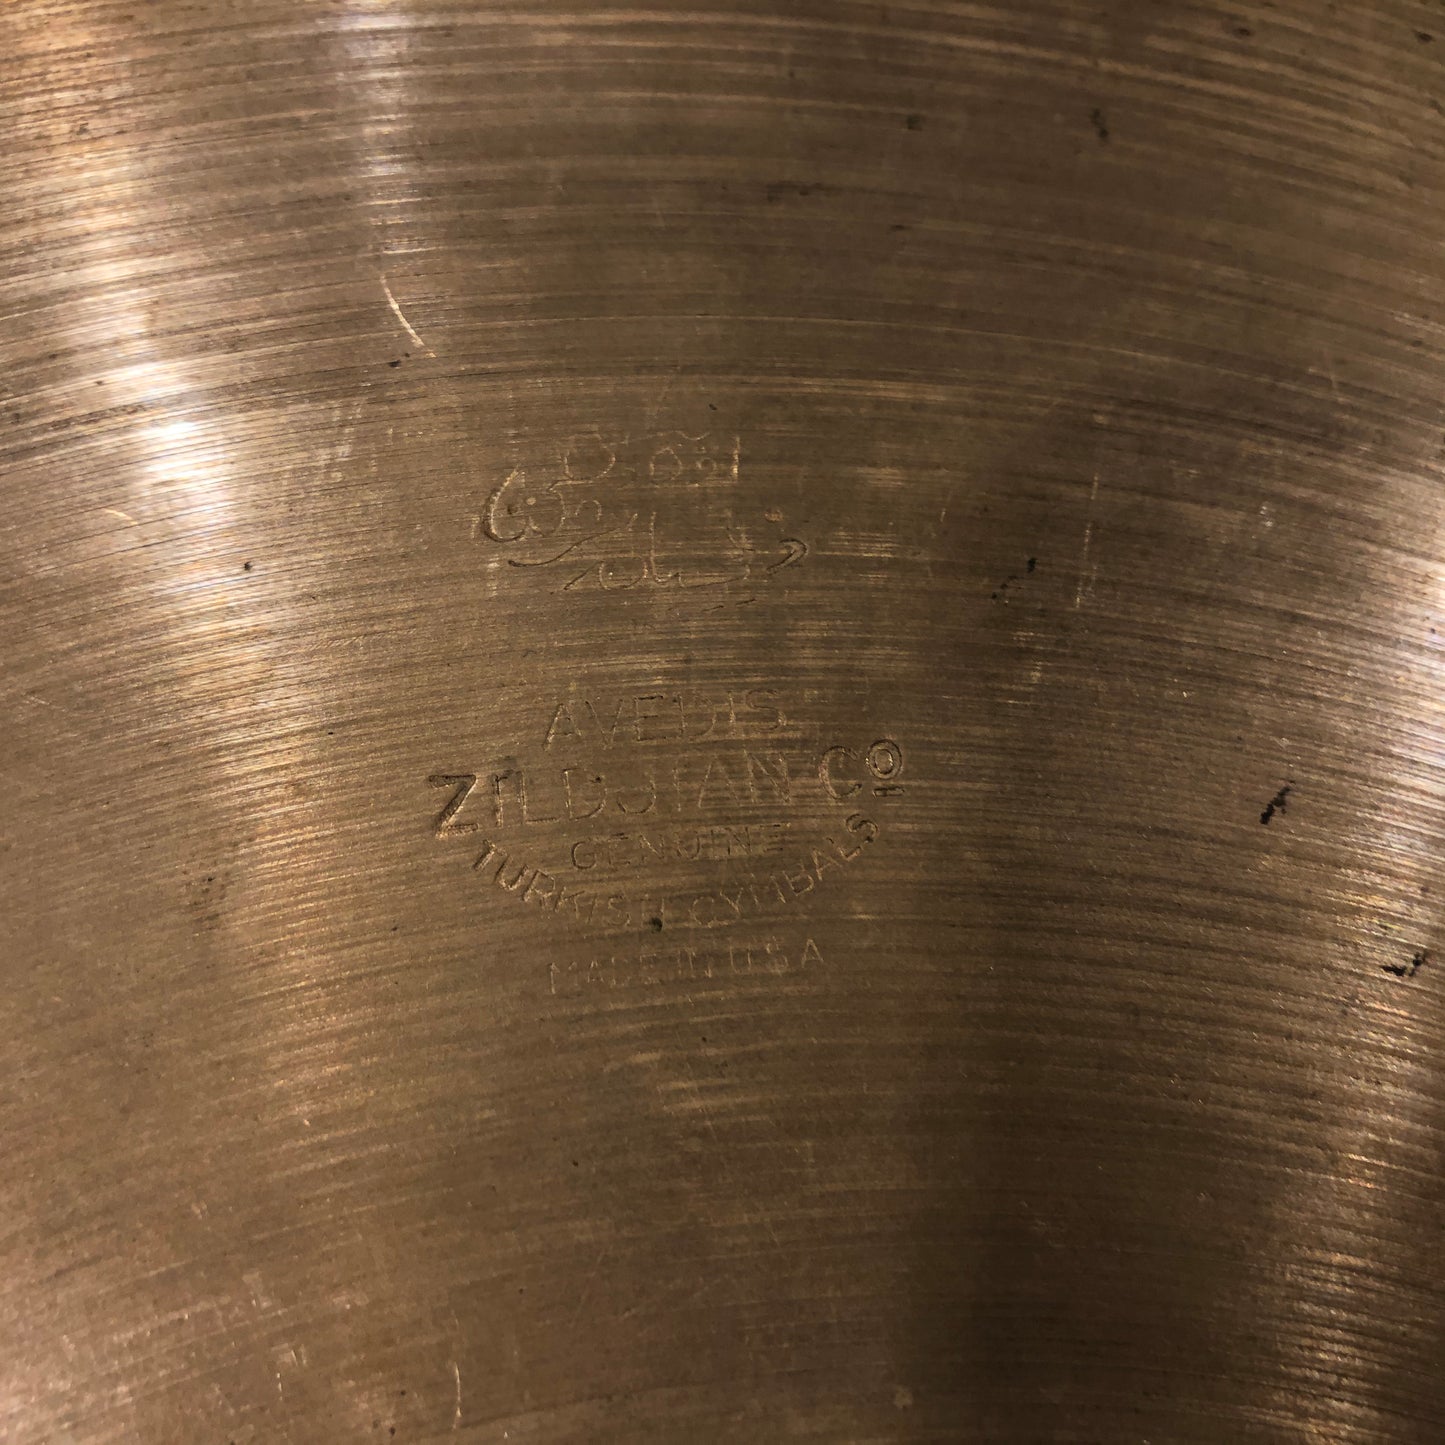 14" Zildjian A Trans Stamp Hi-Hat Single / Crash Cymbal 618g #673